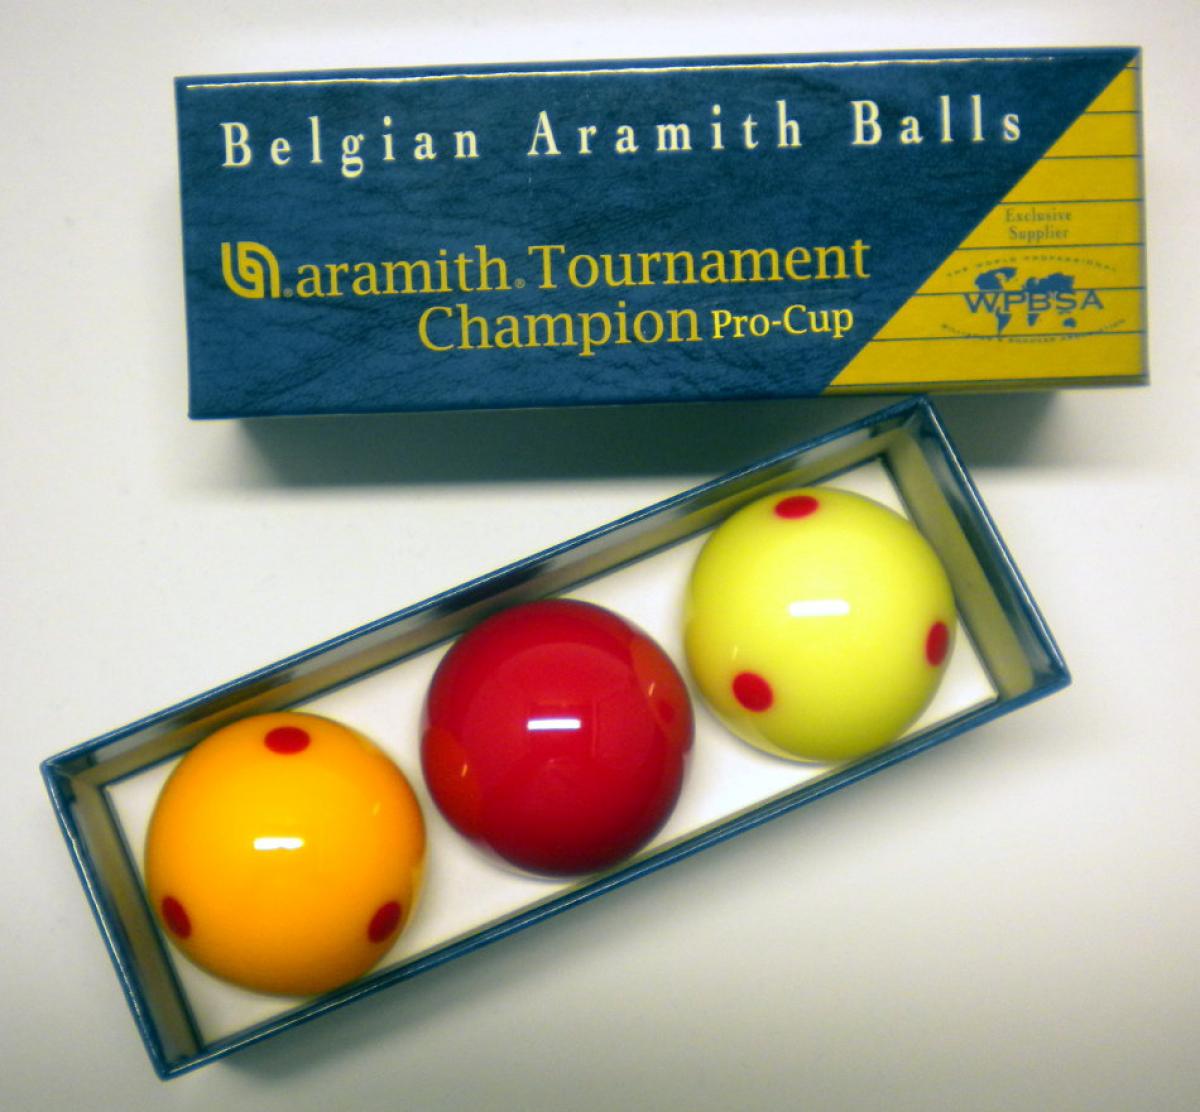 3er Ball Set Belgian Aramith Tournament Champion Pro Cup Billiardkugeln 2 1/8" 